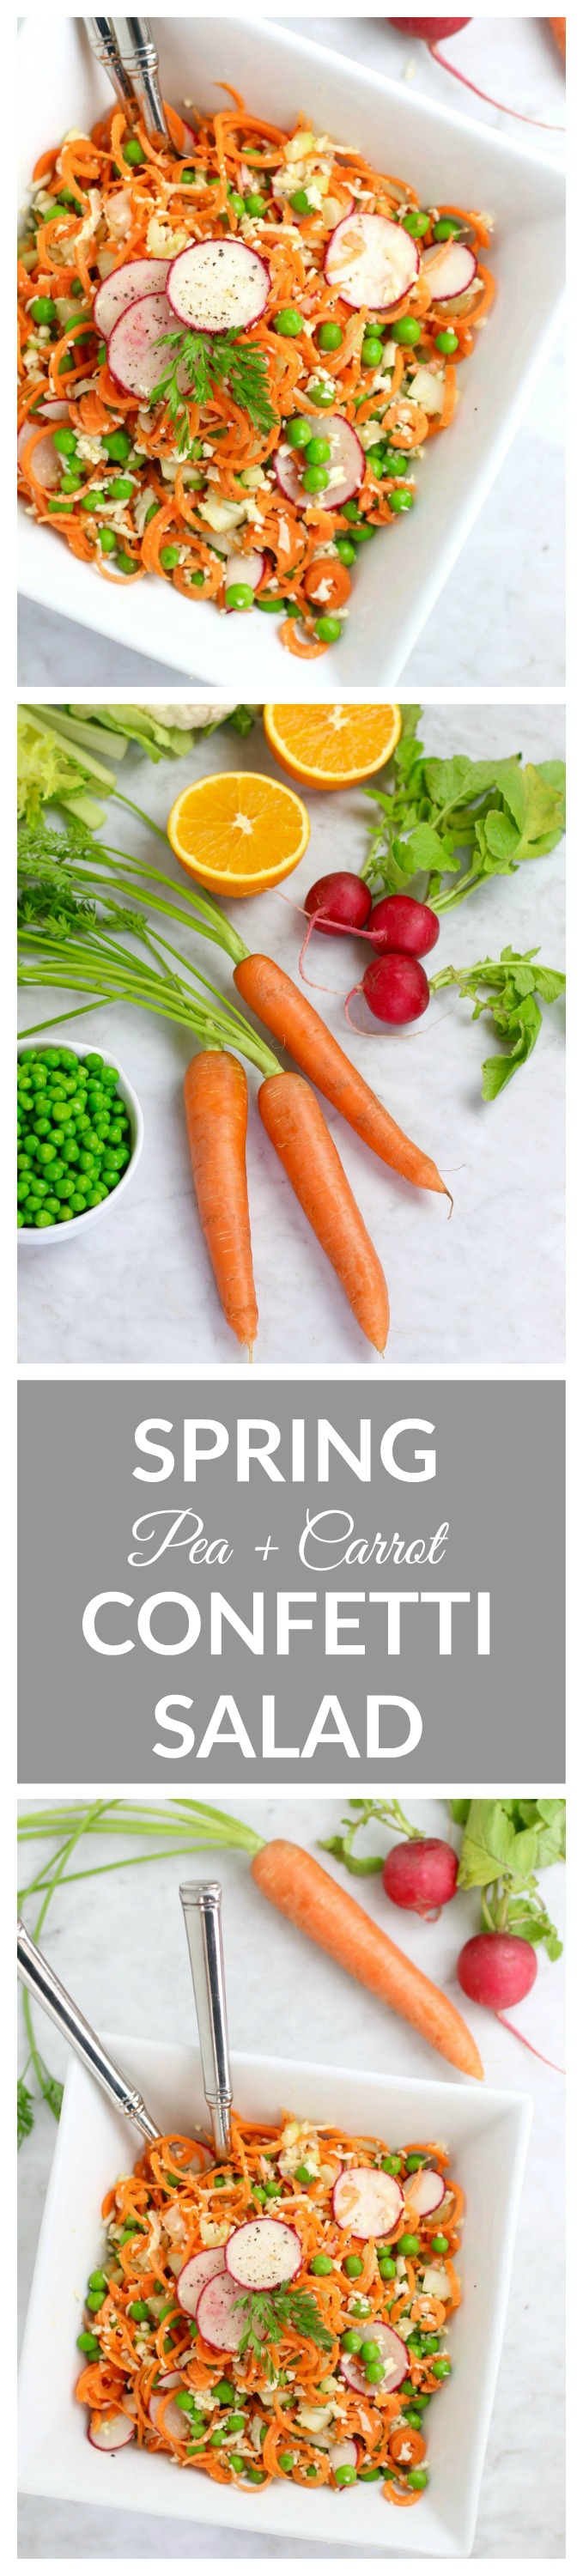 Spring Carrot + Pea Salad